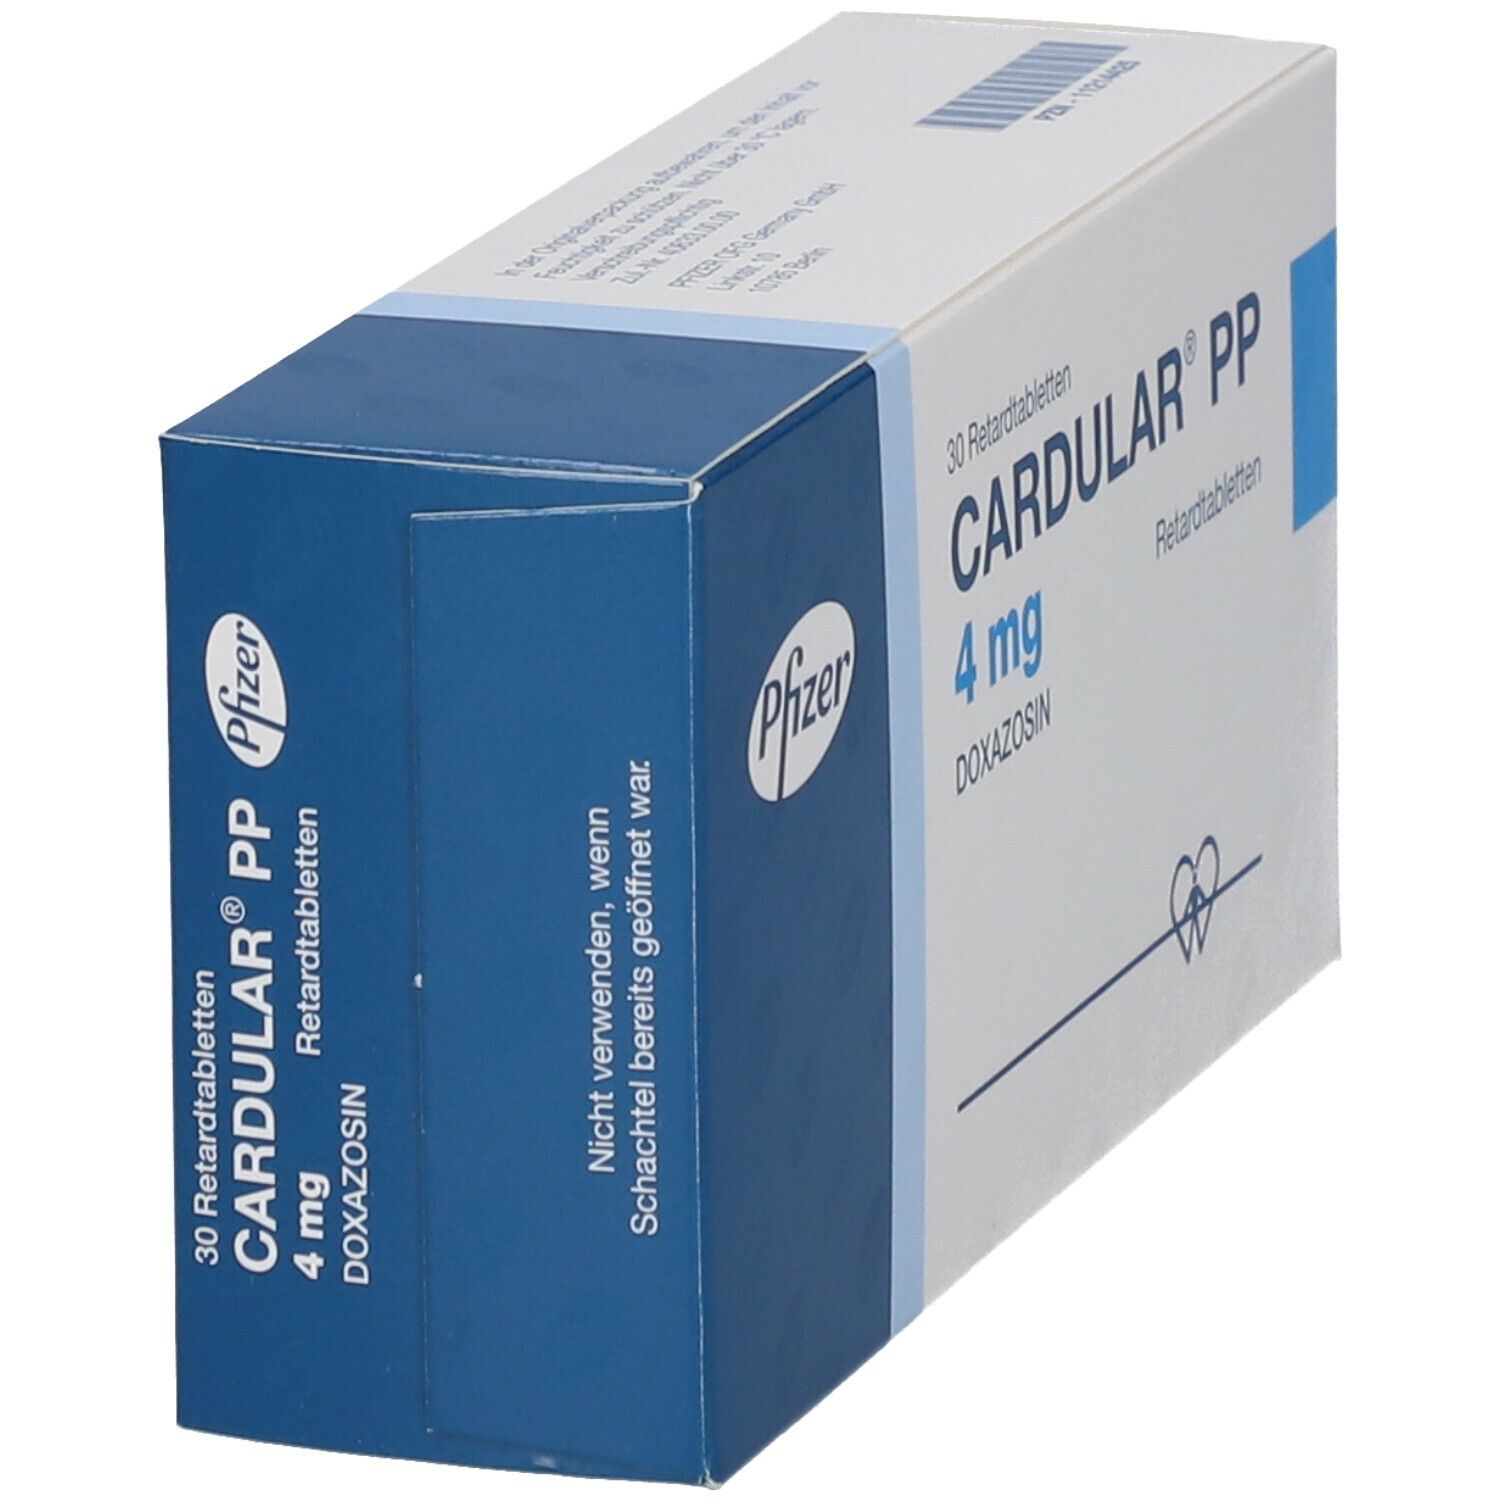 Cardular® PP 4 mg